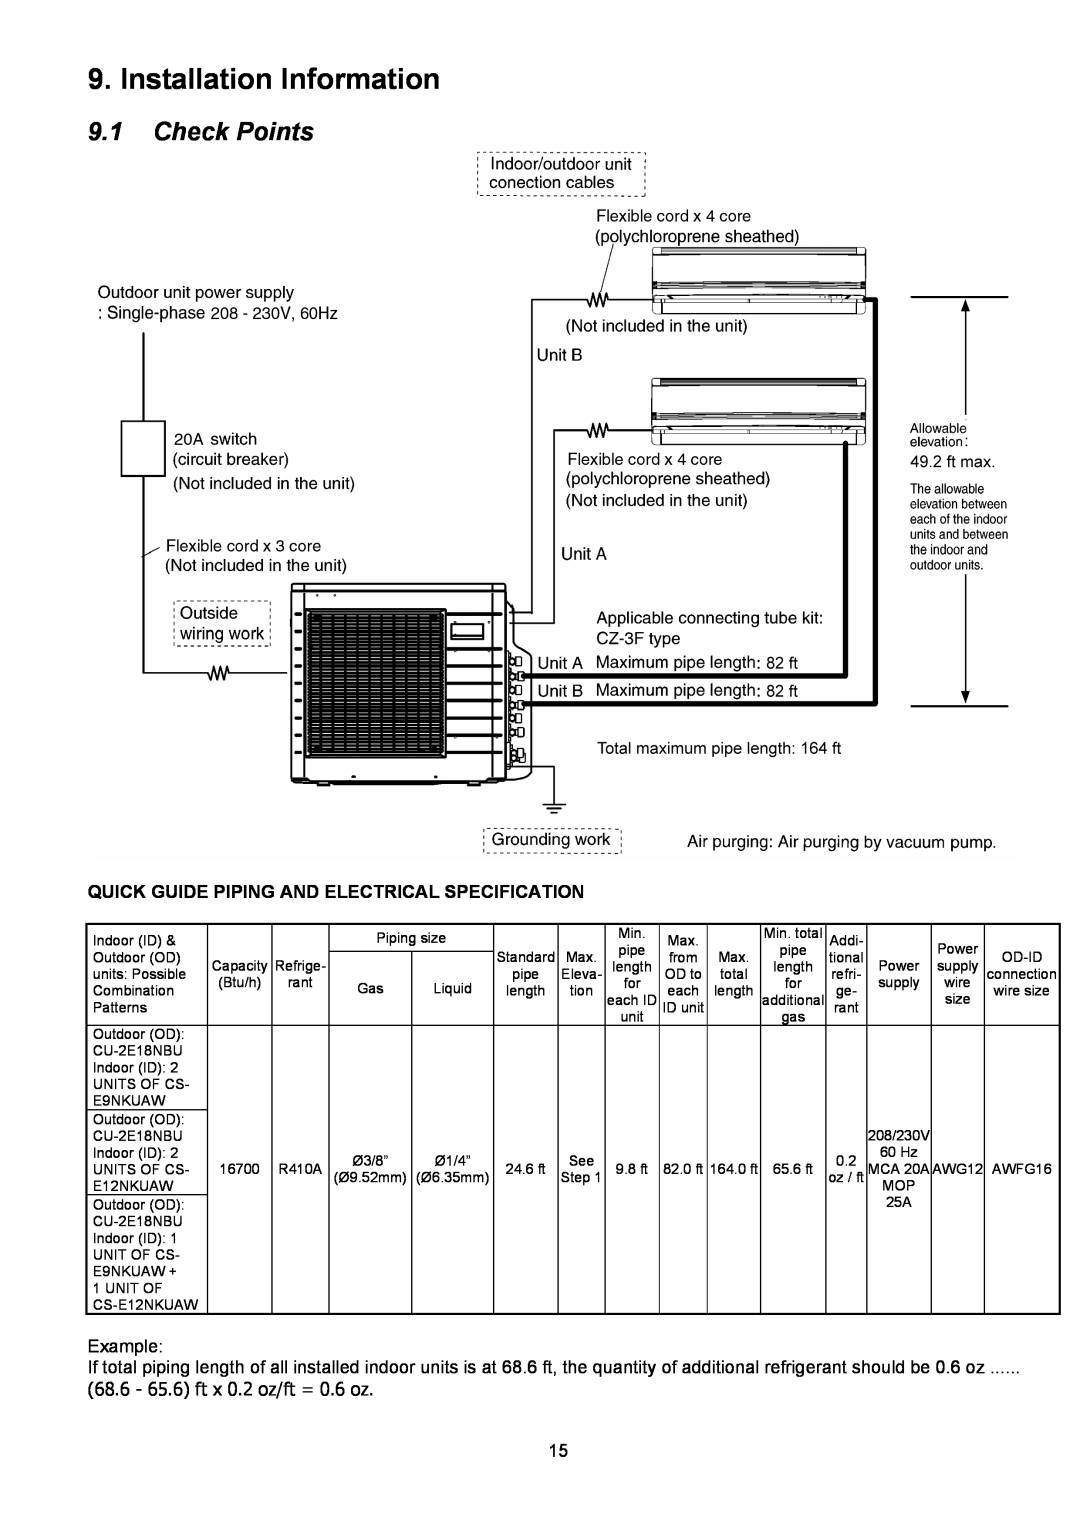 Panasonic CU-2E18NBU service manual Installation Information, 9.1Check Points, 68.6 - 65.6 ft x 0.2 oz/ft = 0.6 oz 